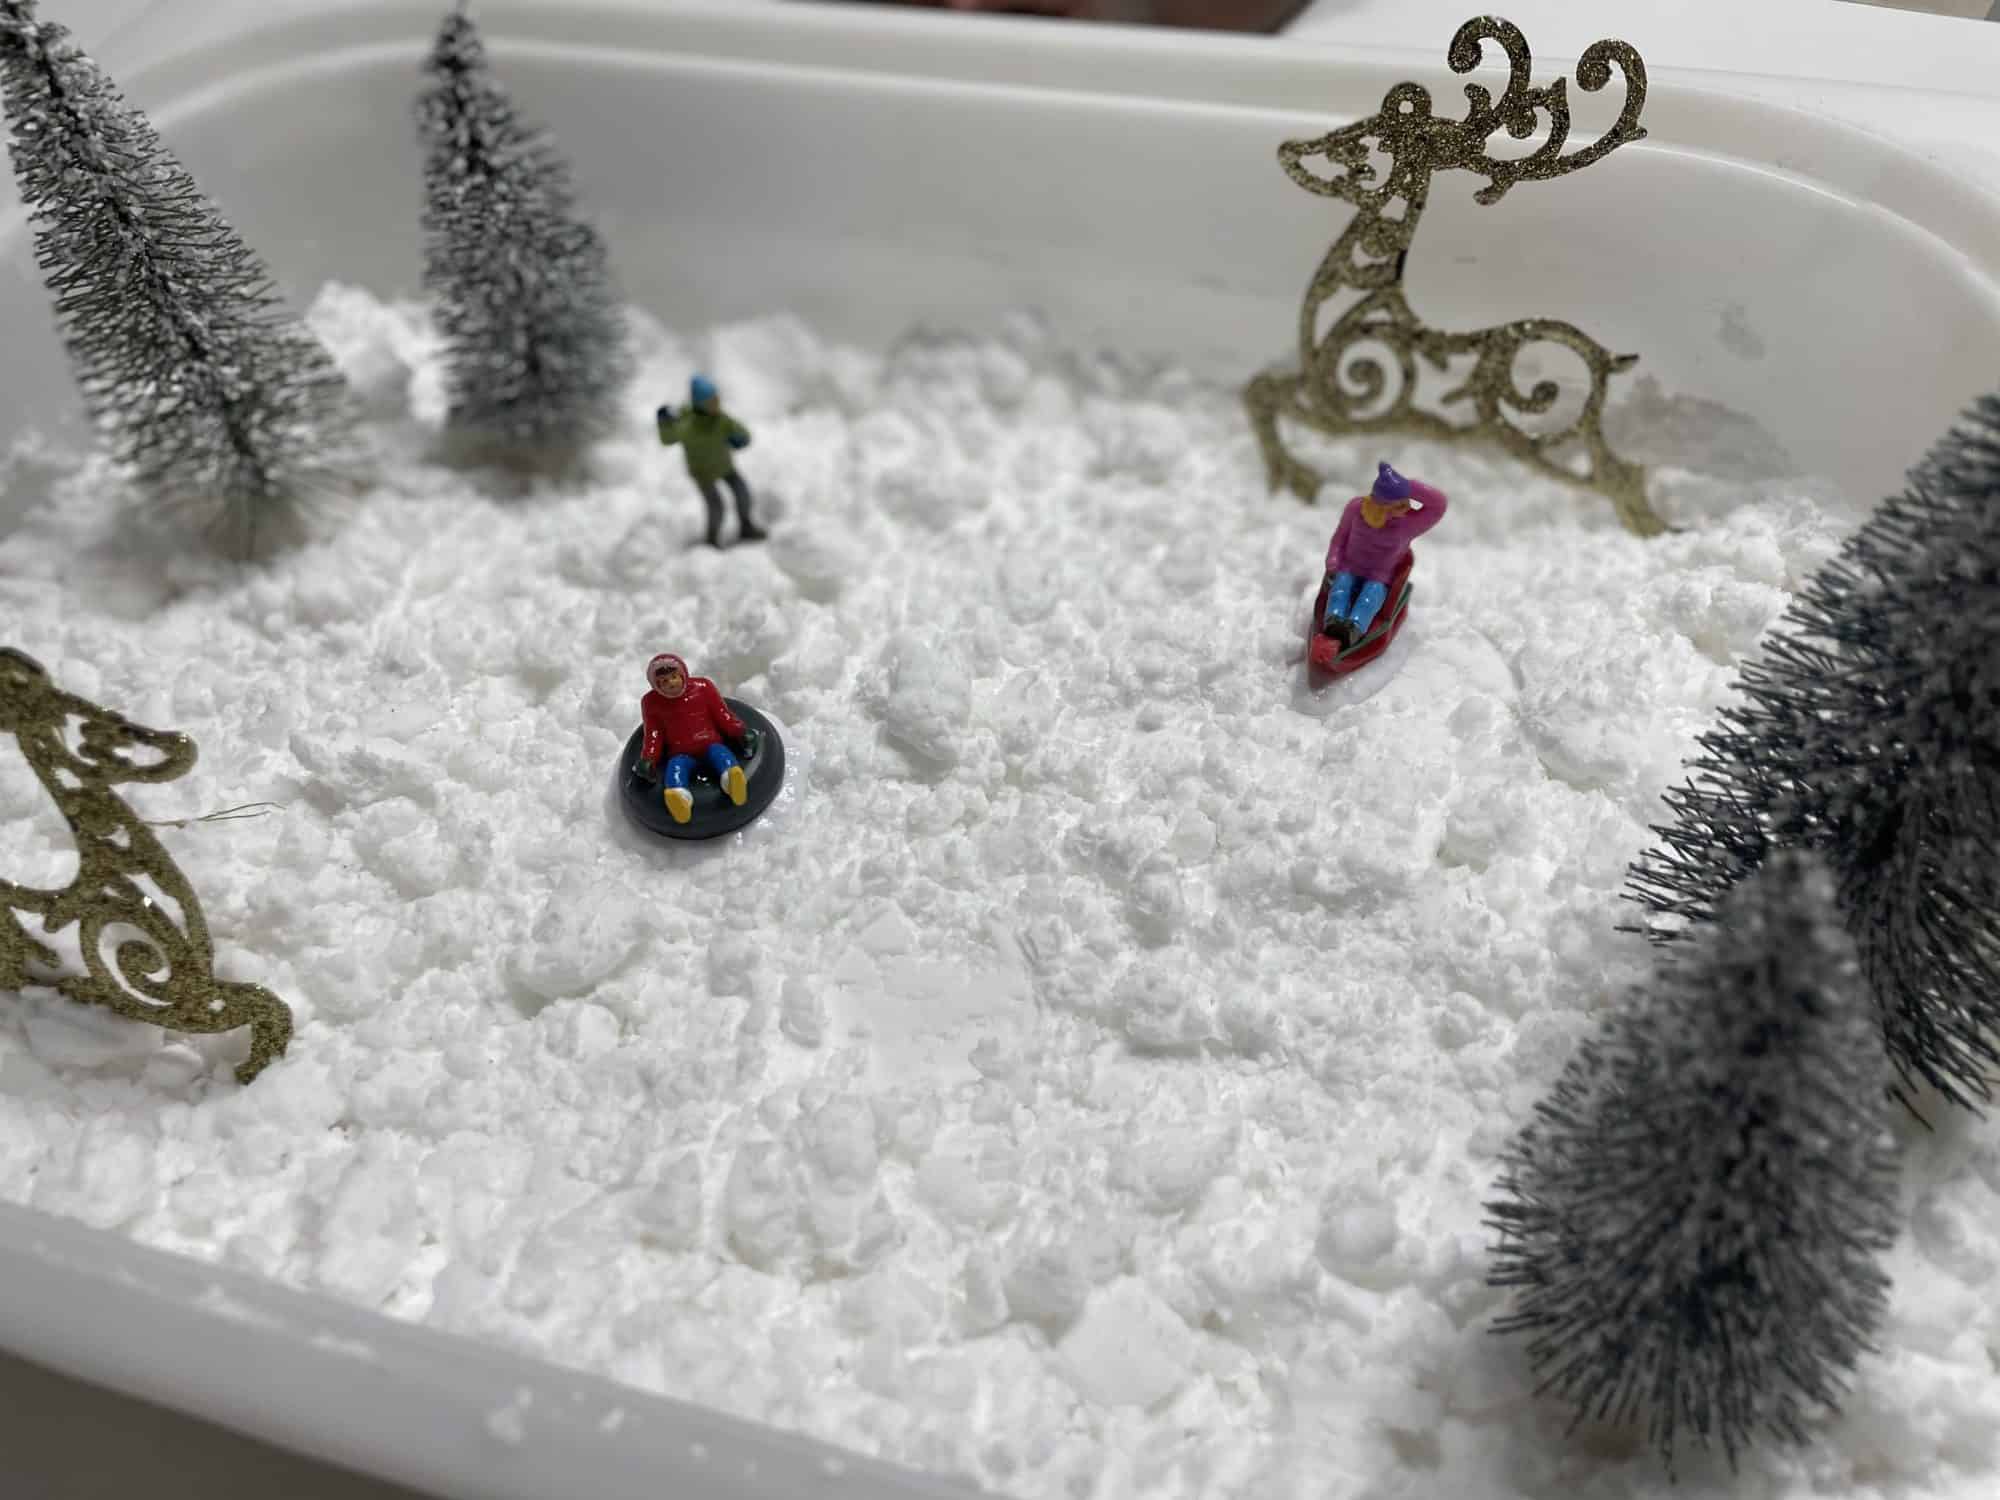 diy snow recipes for kids - setting up a winter sensory bin